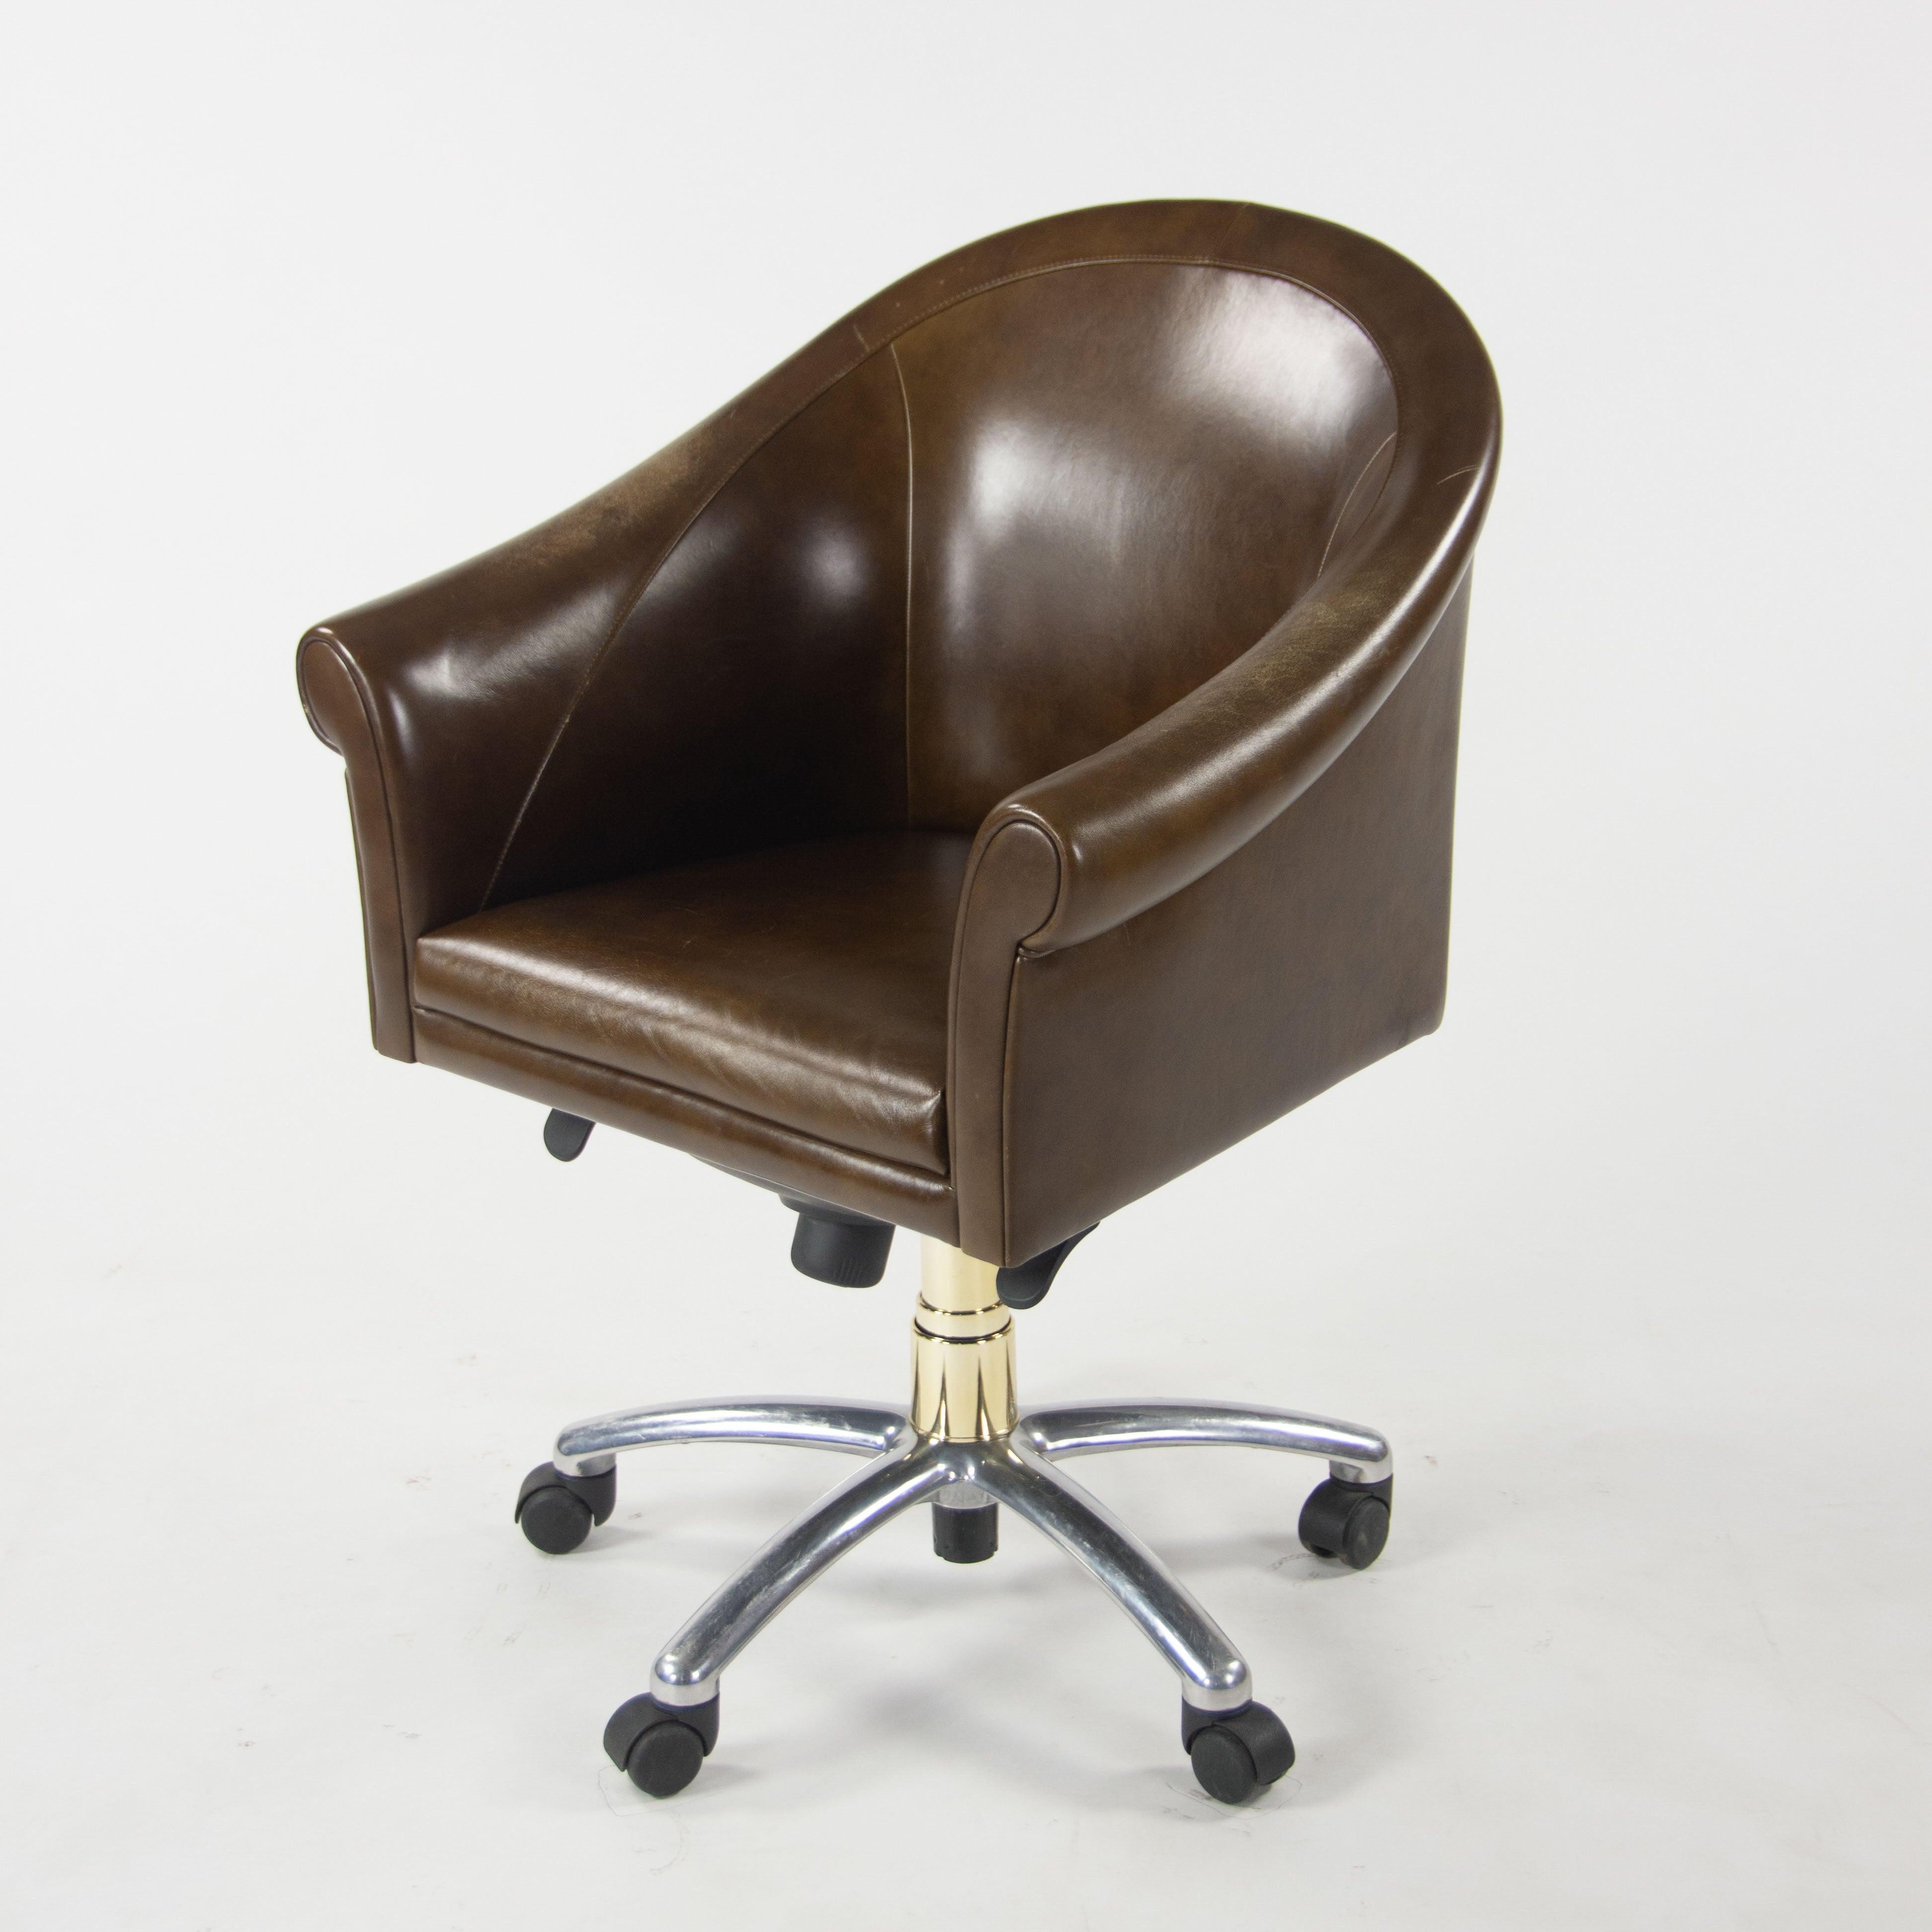 Poltrona Frau Brown Leather Luca Scacchetti Sinan Office Desk Chair en vente 2